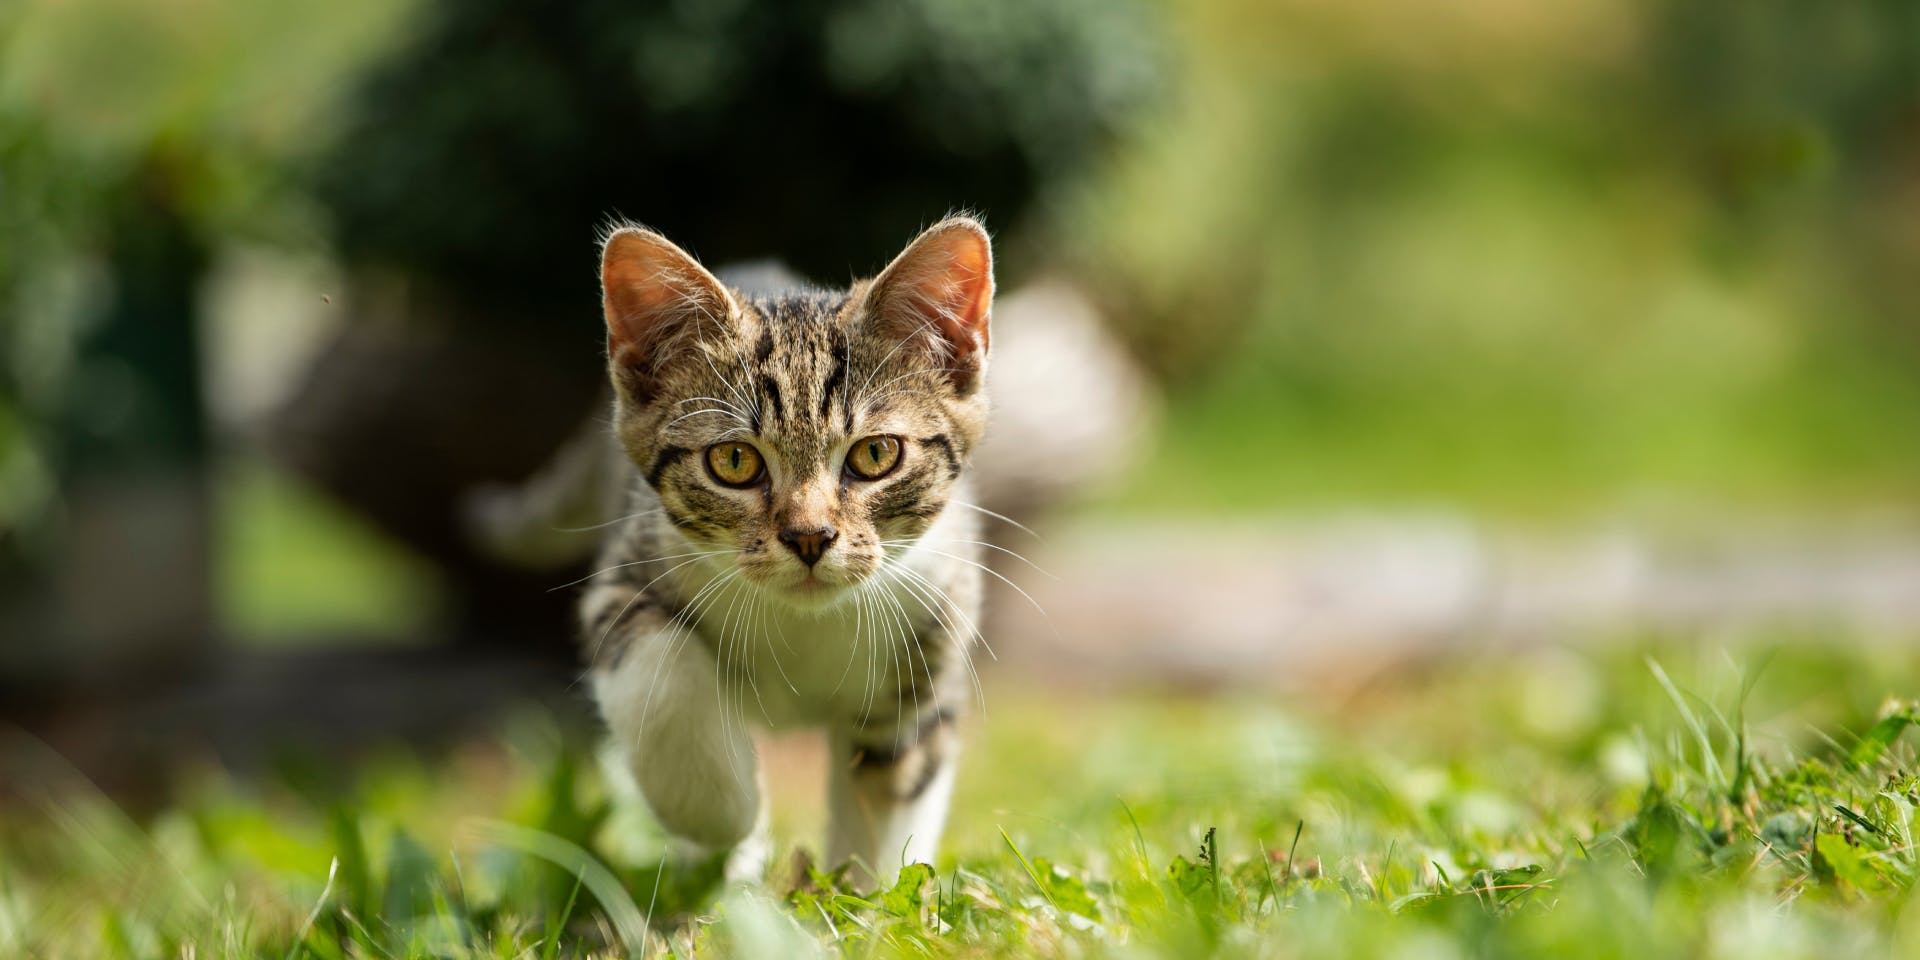 A tabby kitten walking on the grass.